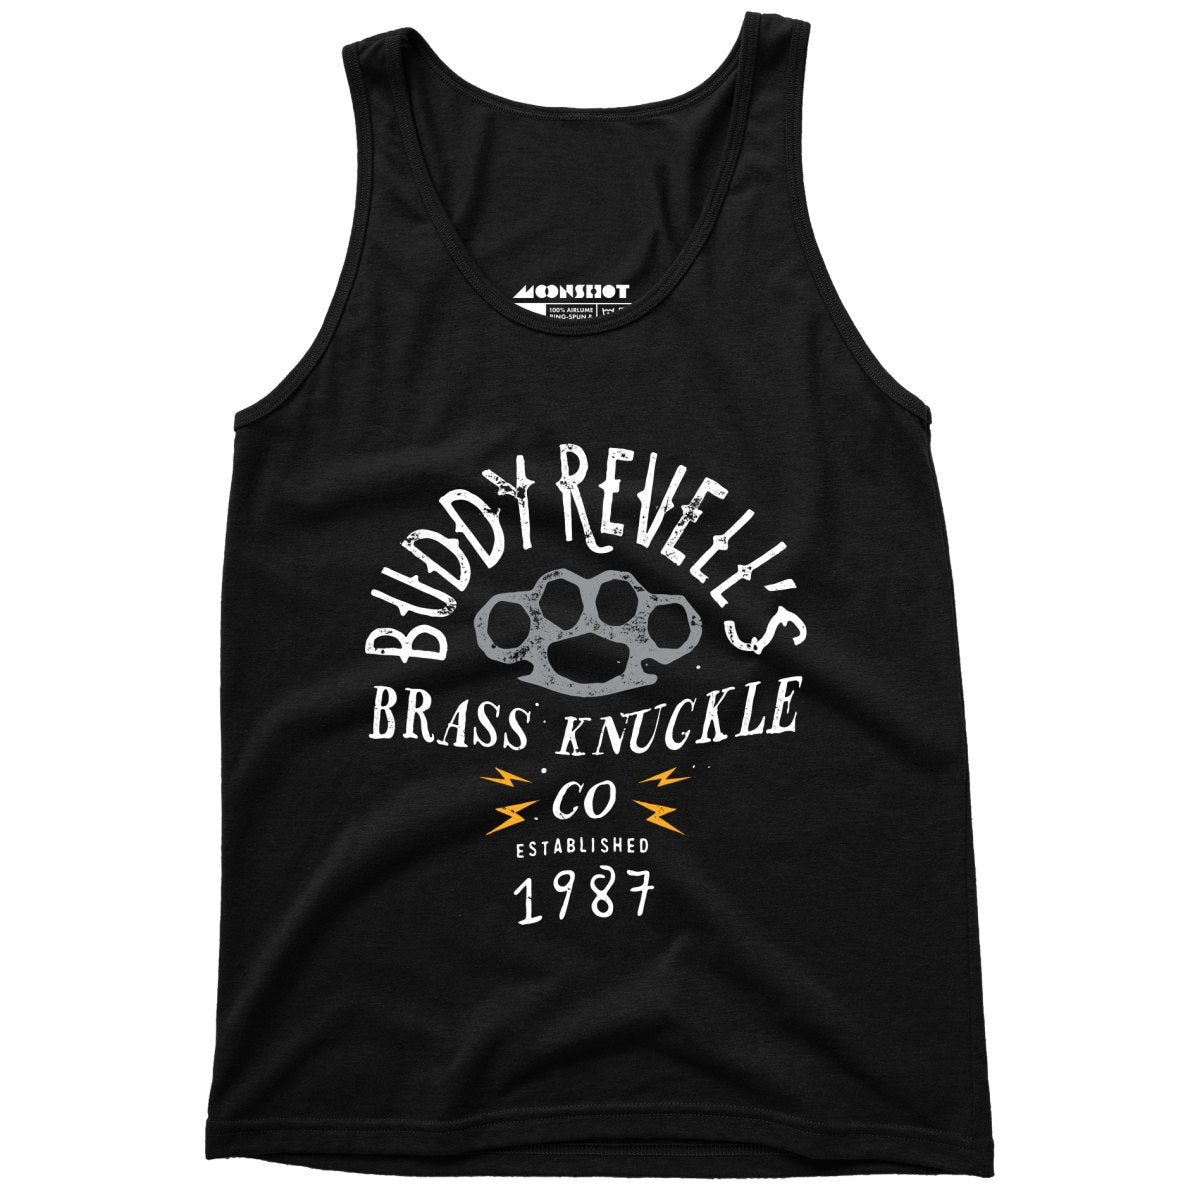 Buddy Revell's Brass Knuckle Co. - Unisex Tank Top